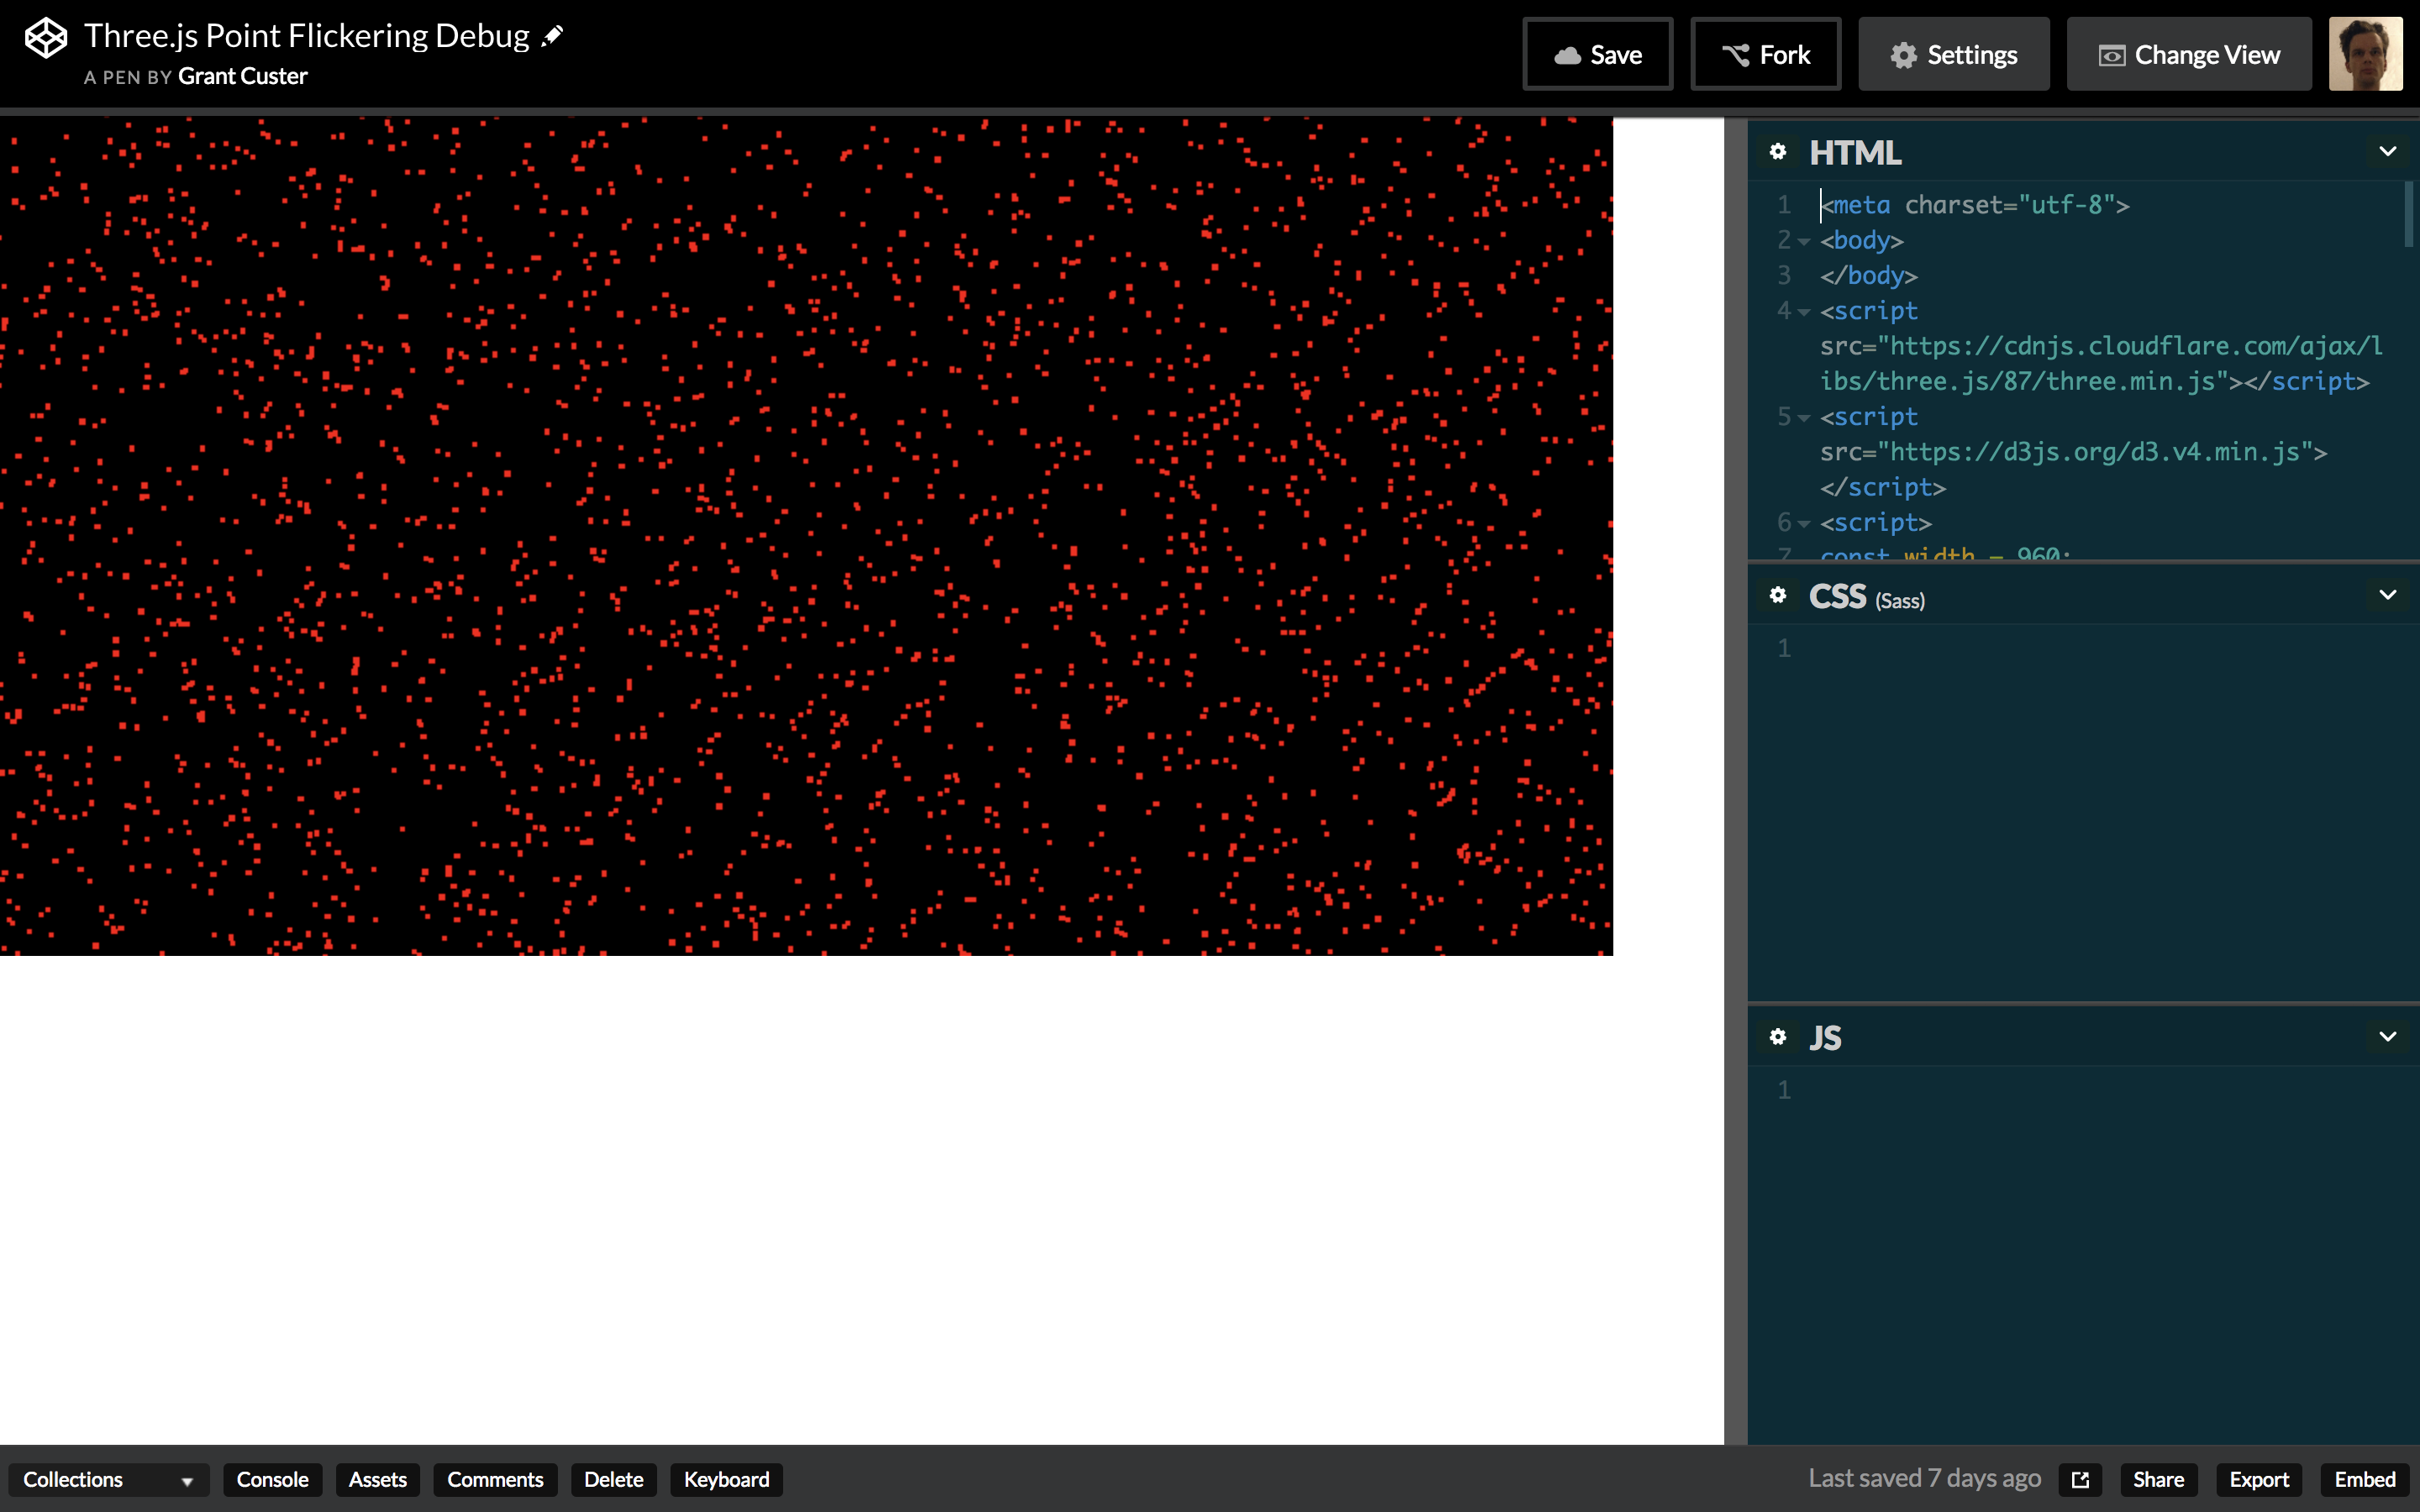 A screenshot of the flickering points debug demo.